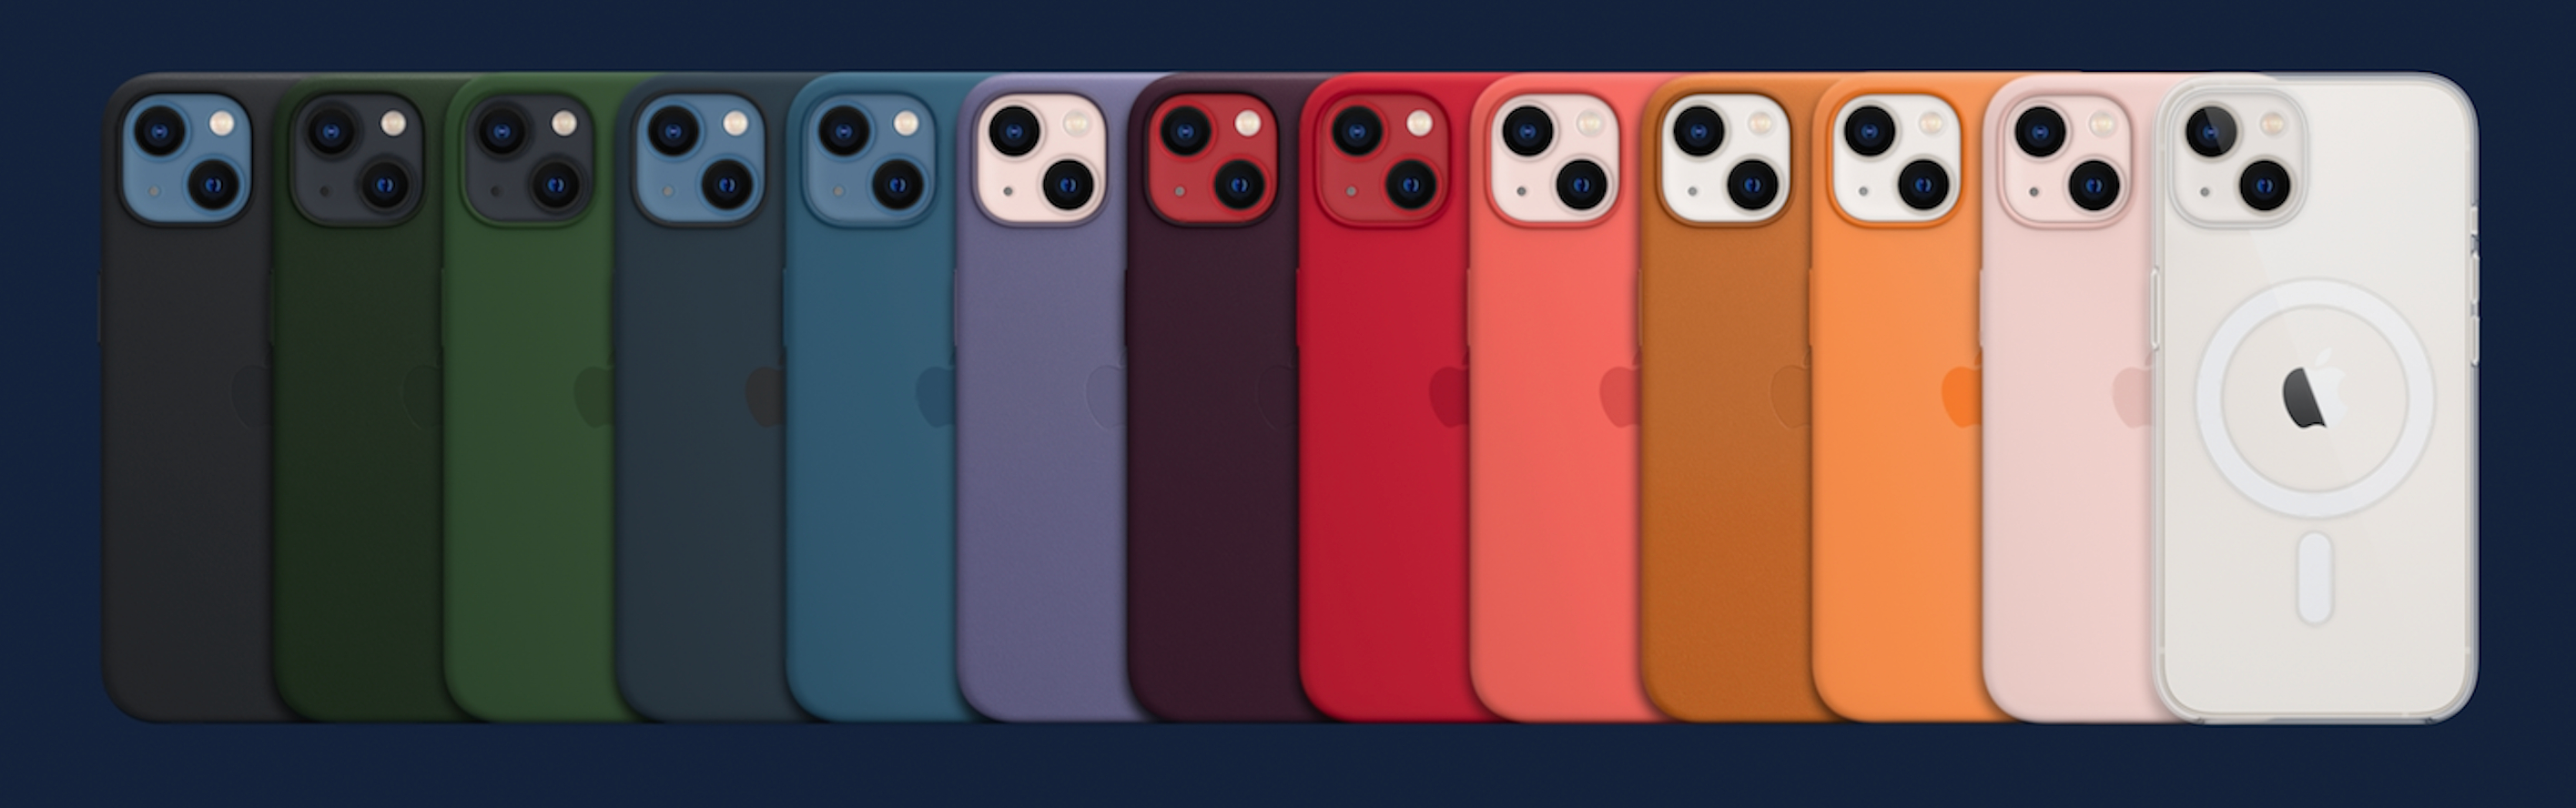 Apple Silicon Case iphone 13 Mini. Apple iphone 13 Pro чехол. Apple Silicon Case iphone 13 Pro Max. Чехол Эппл оригинальный айфон 13. Чехол от 13 айфона на 15